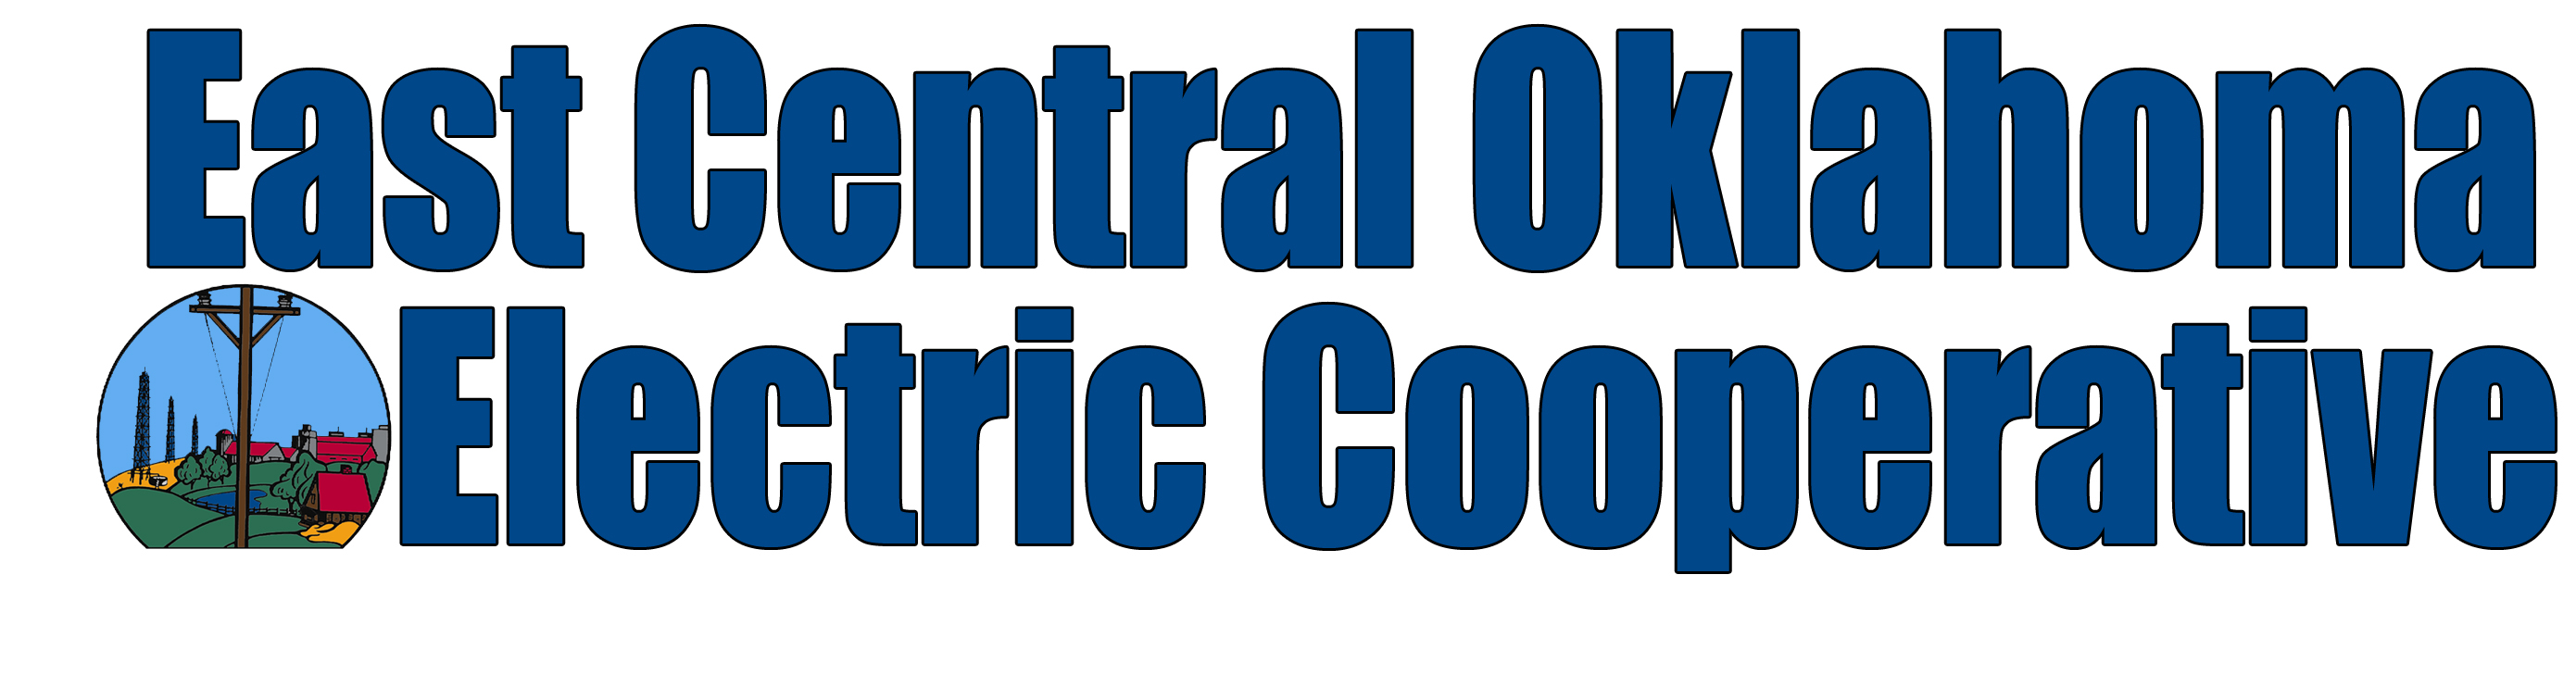 east central logo